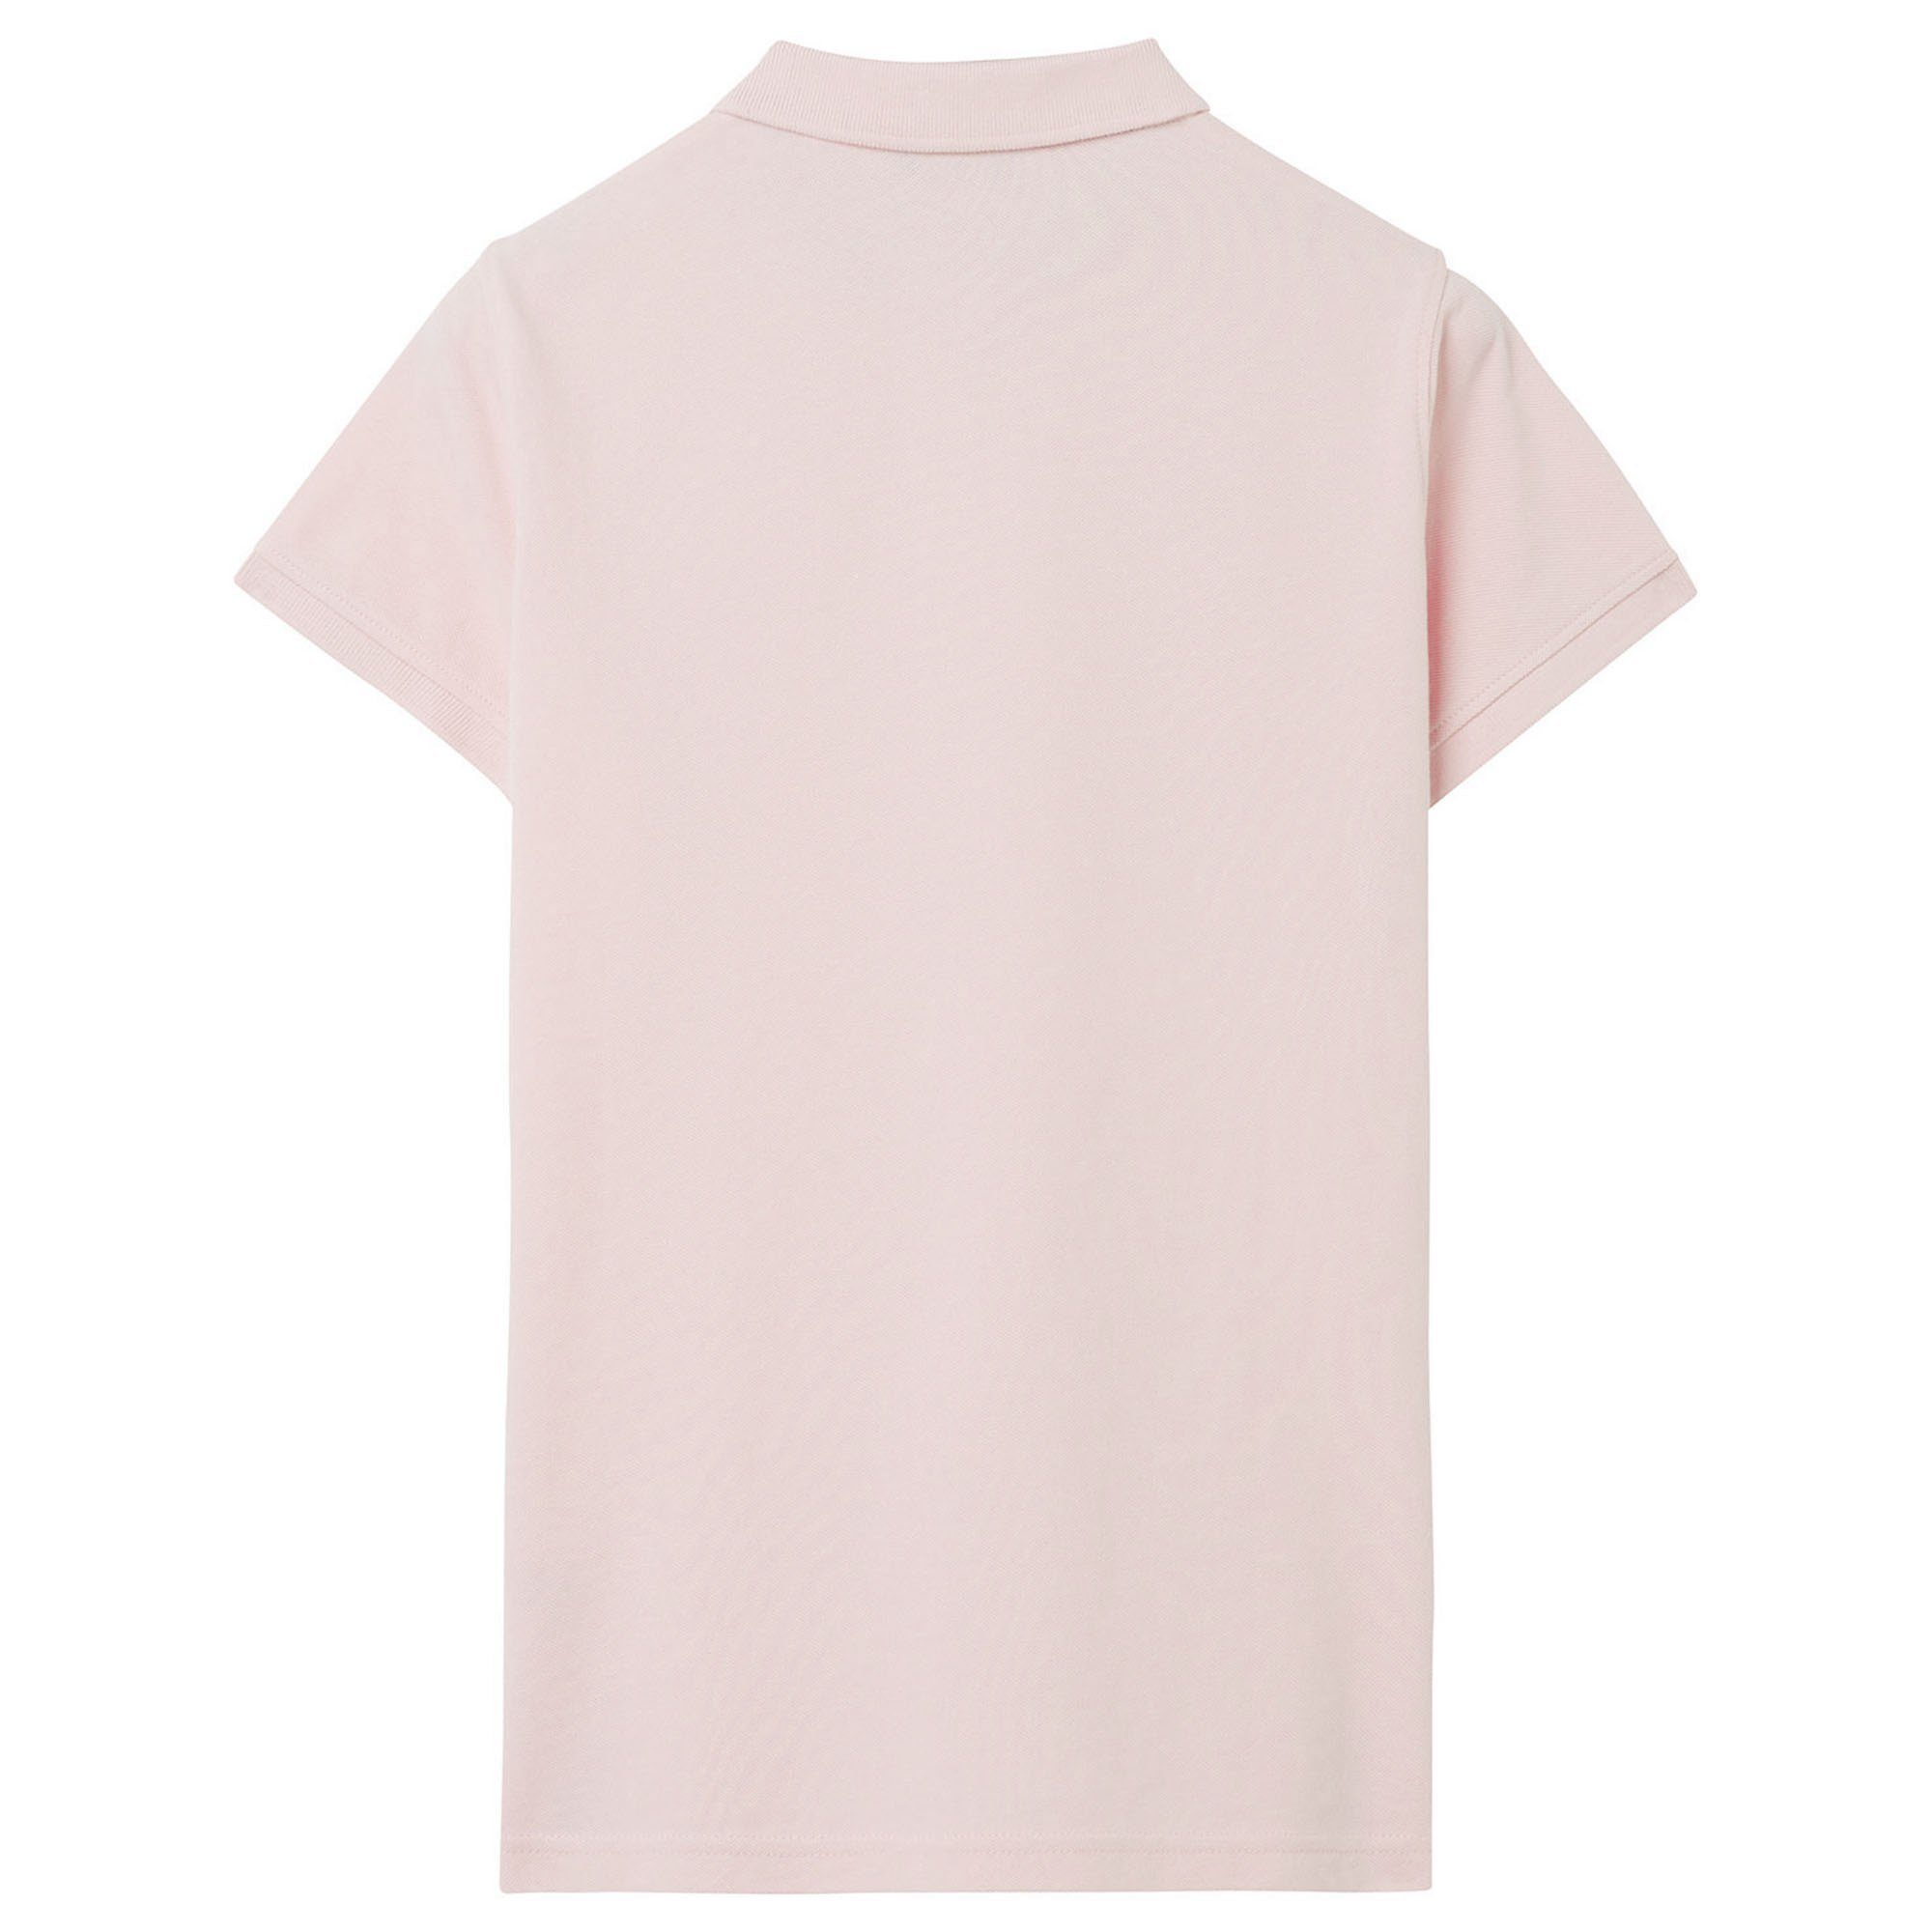 Damen Halbarm (Pale Rosa T-Shirt - MD. Gant Pink) Poloshirt Pique, Summer